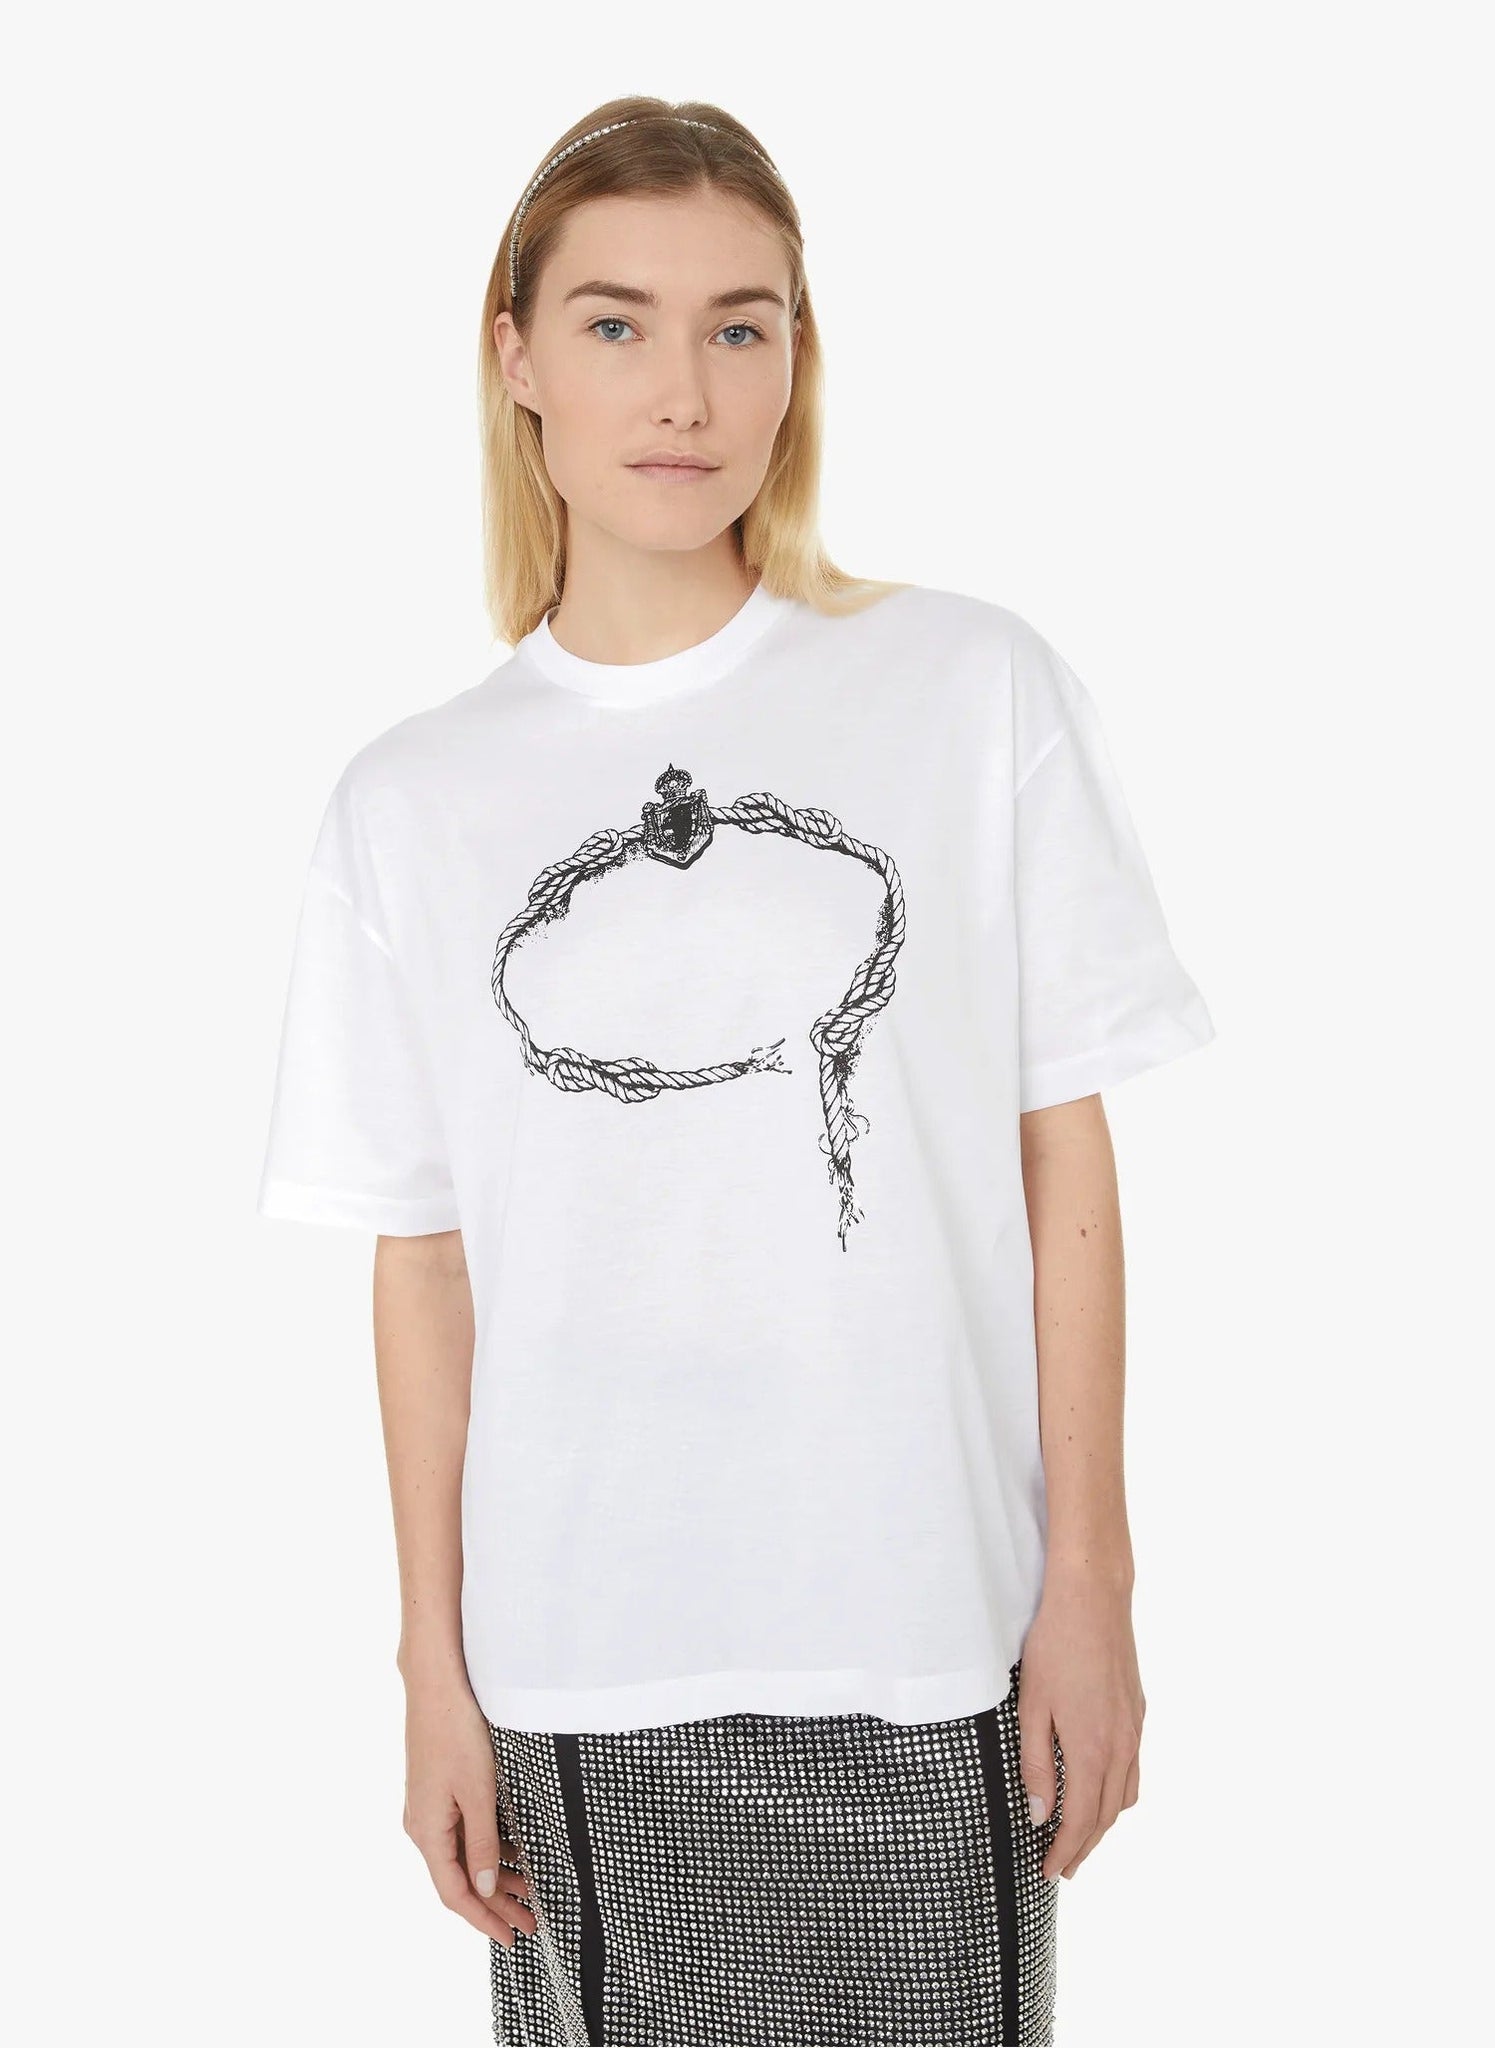 PRADA Logo Print Cotton T-shirt - White